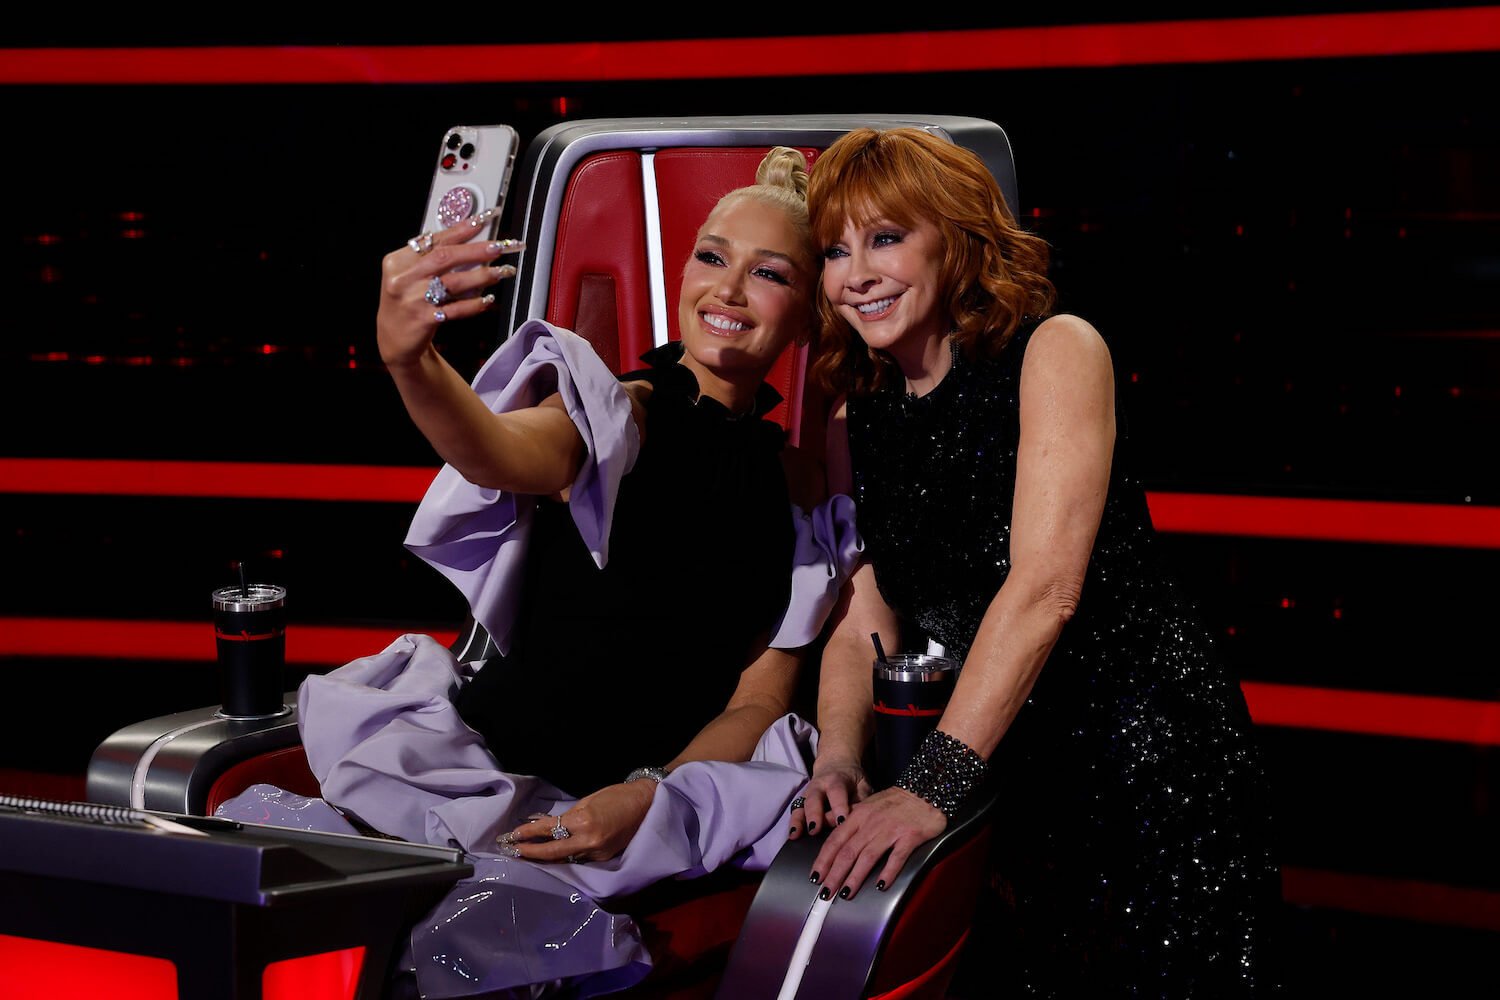 'The Voice' Season 24 stars Gwen Stefani and Reba McEntire taking a selfie